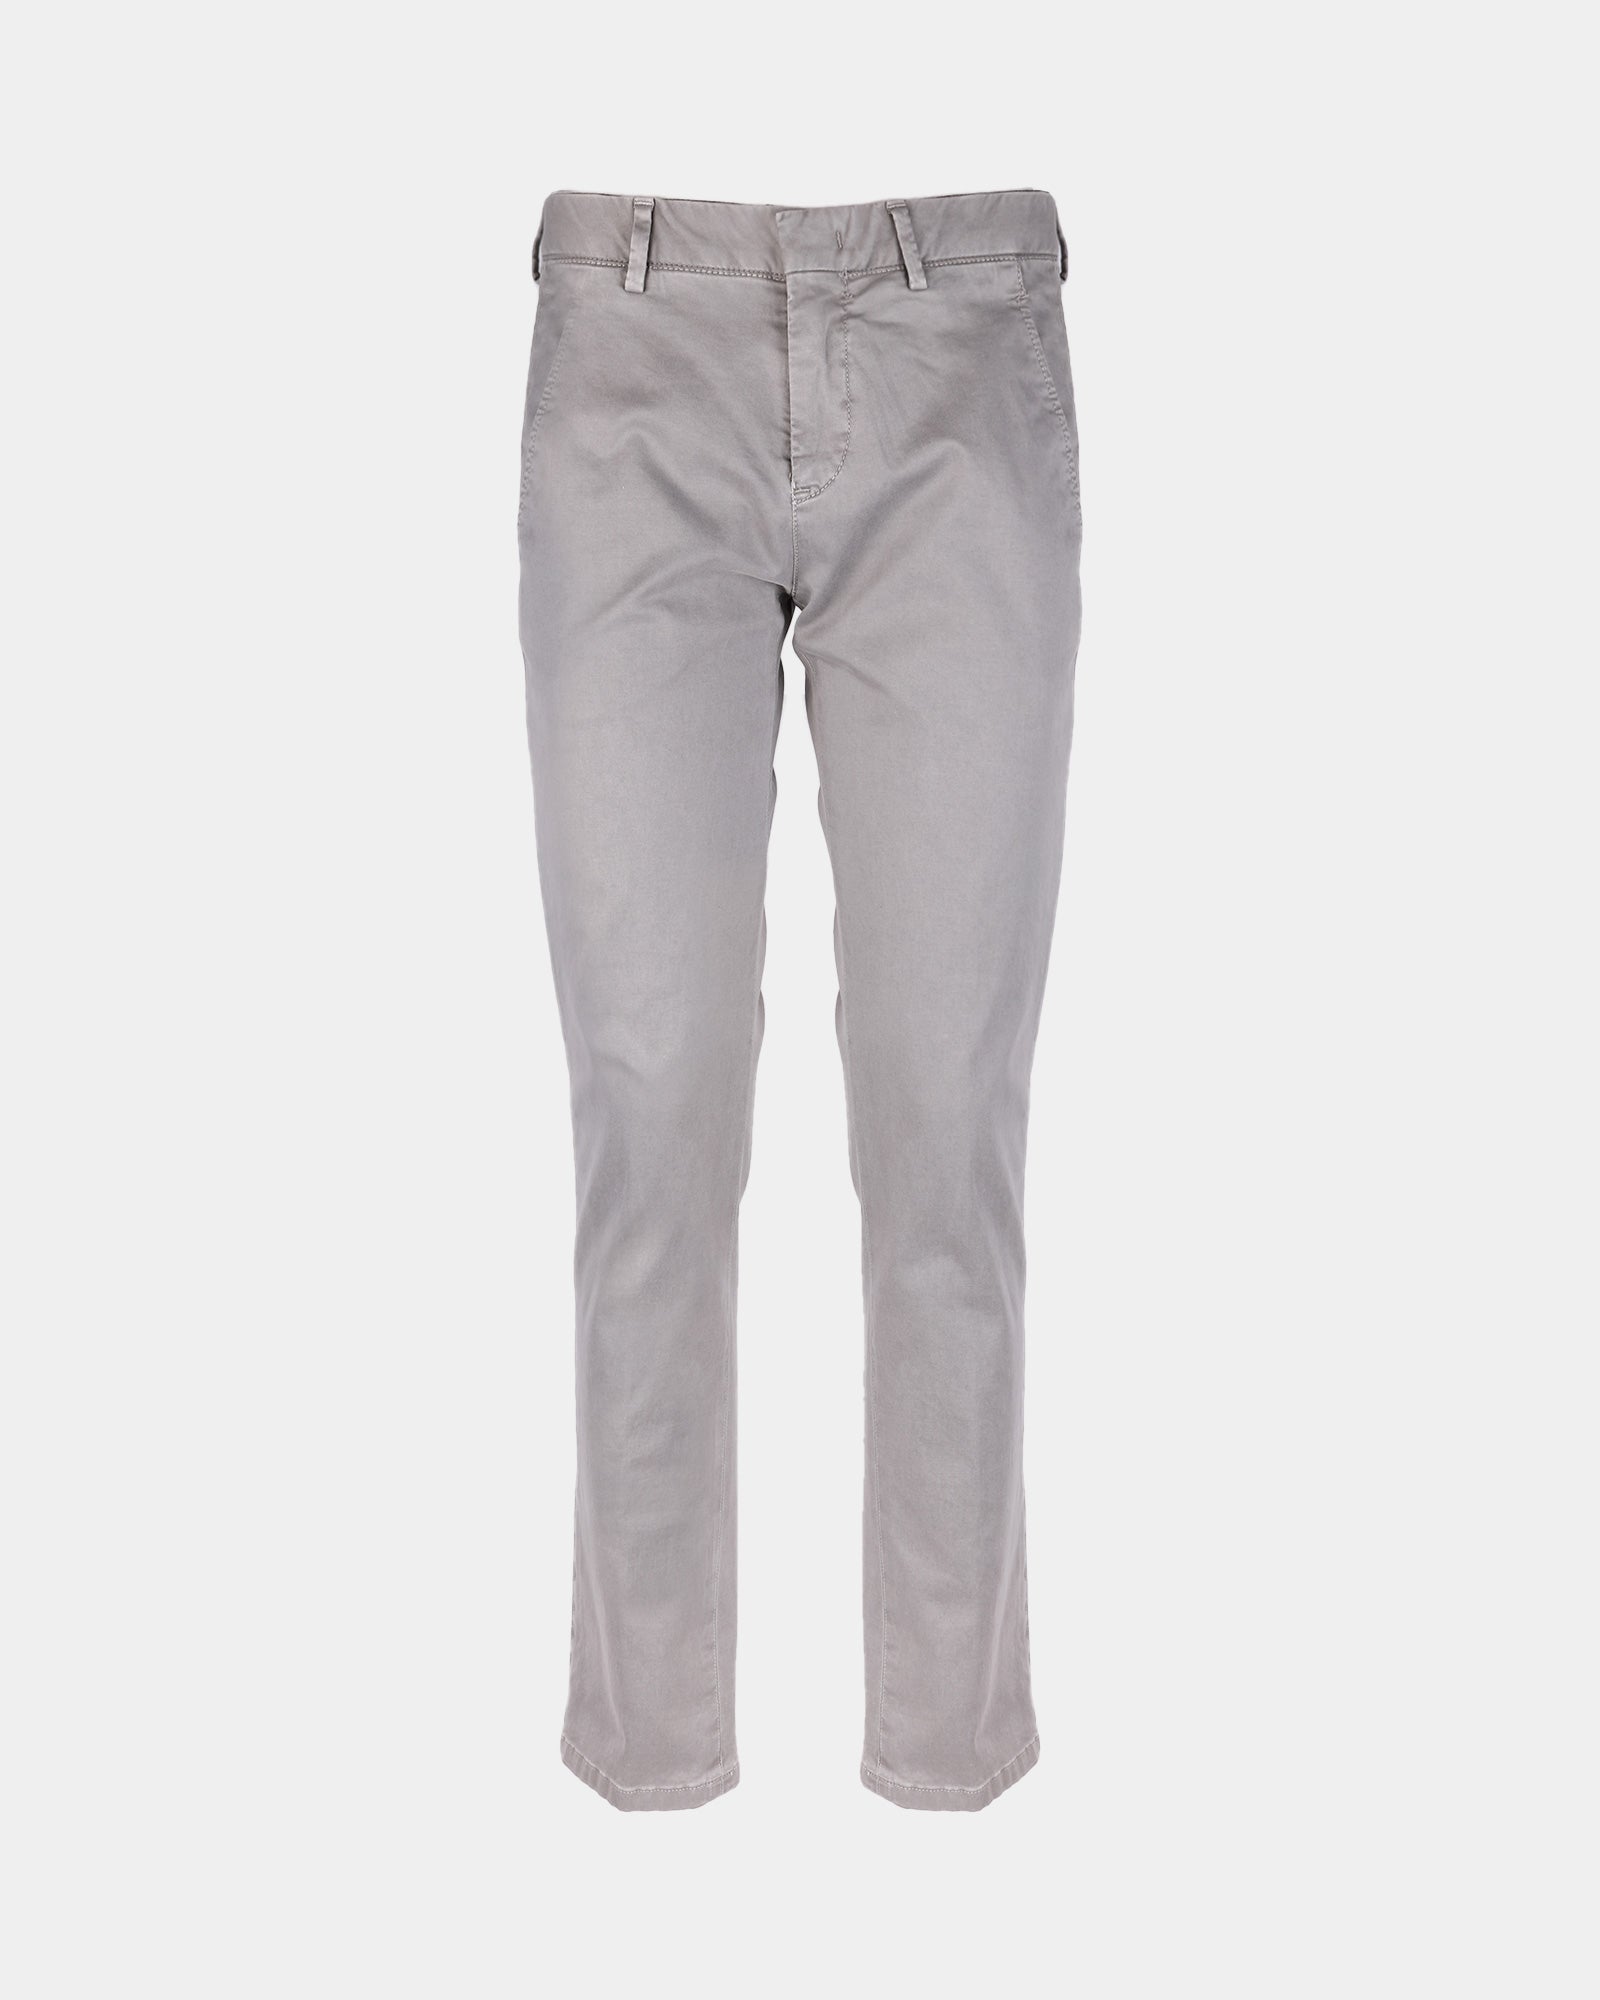 Pantalone PT grigio